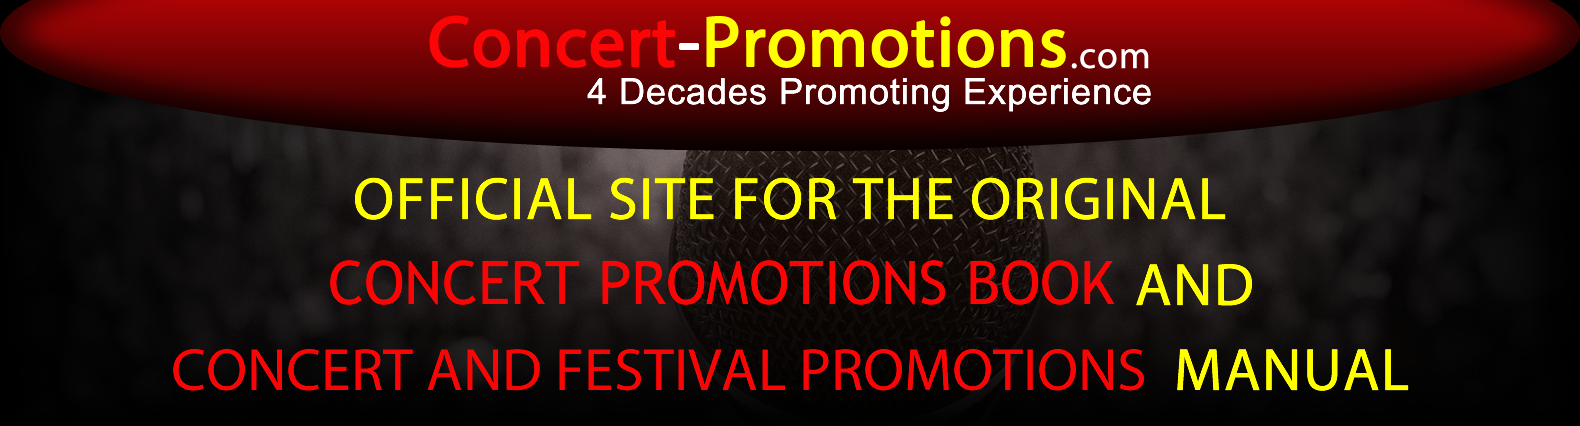 concert-promotions.com banner